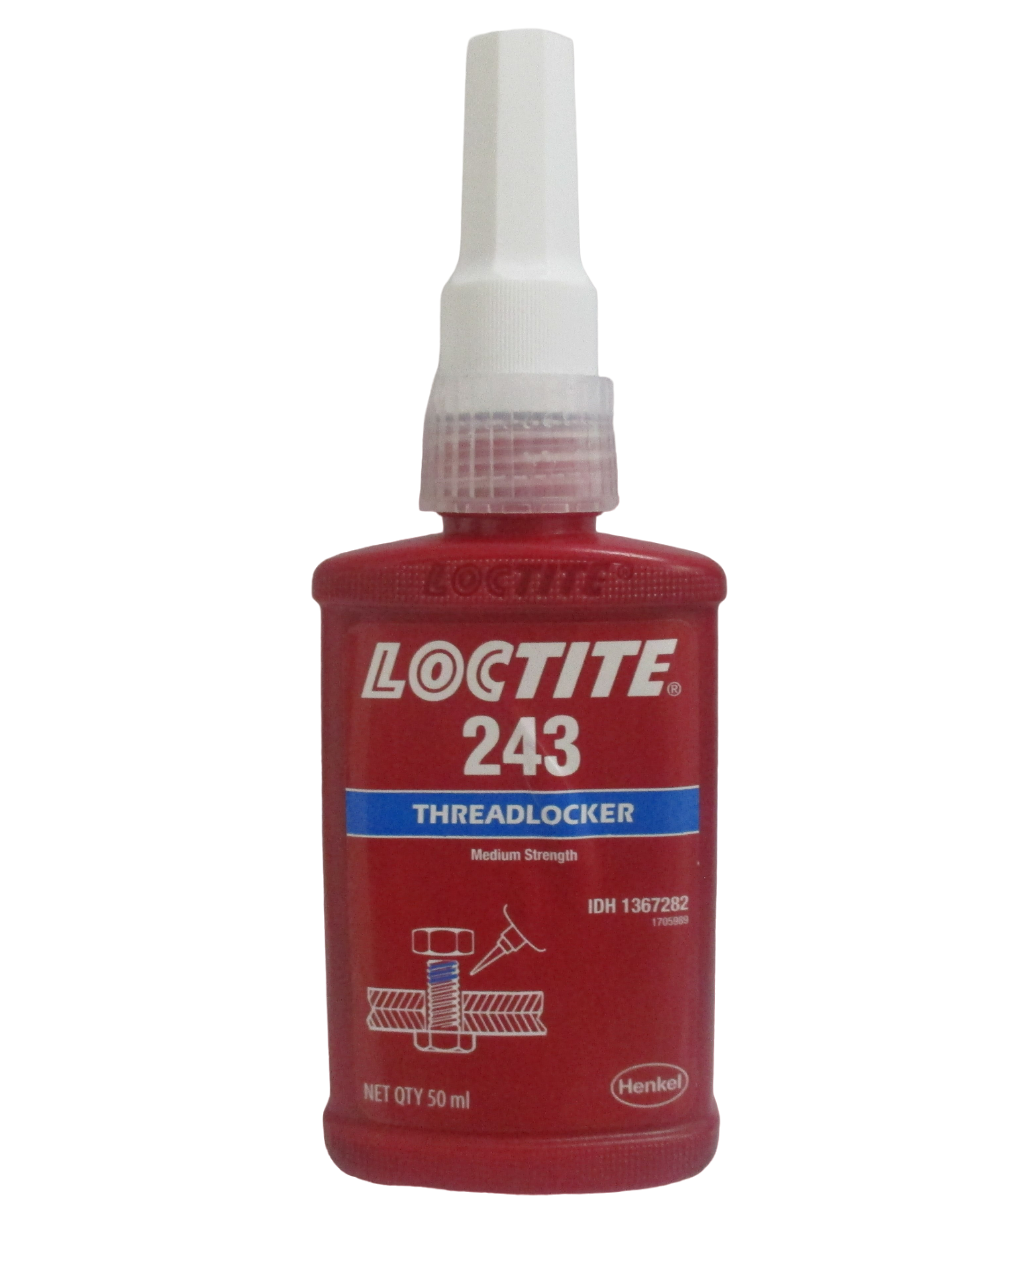 C625-50ML - LOCTITE 243 THREADLOCKER 50 ml BOTTLE